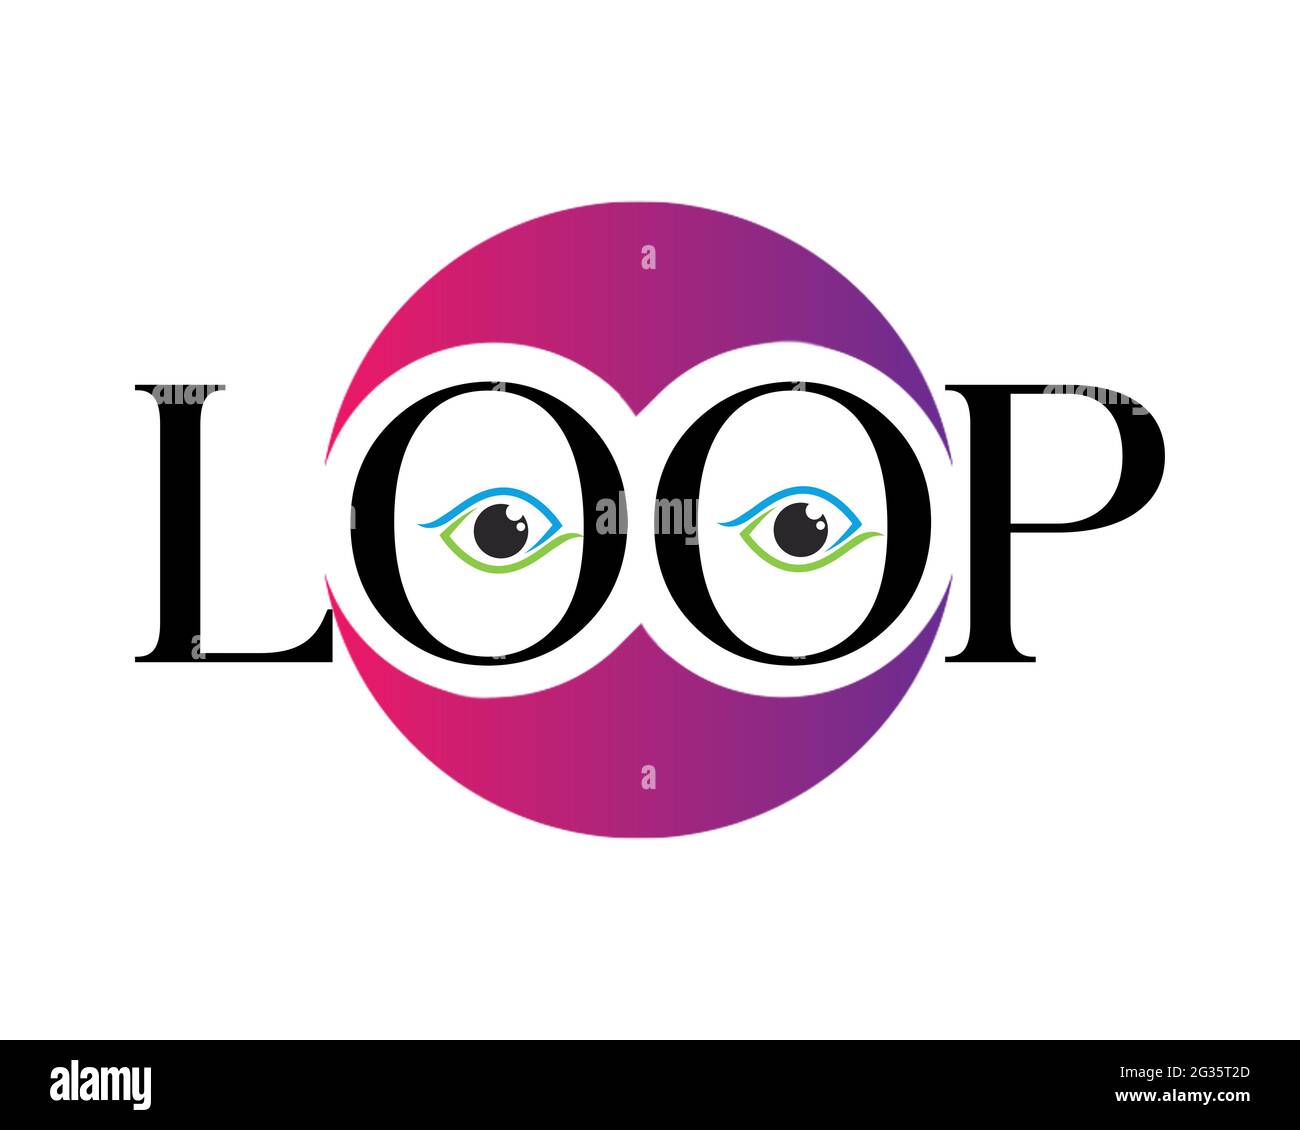 Loop logo Stock Photo